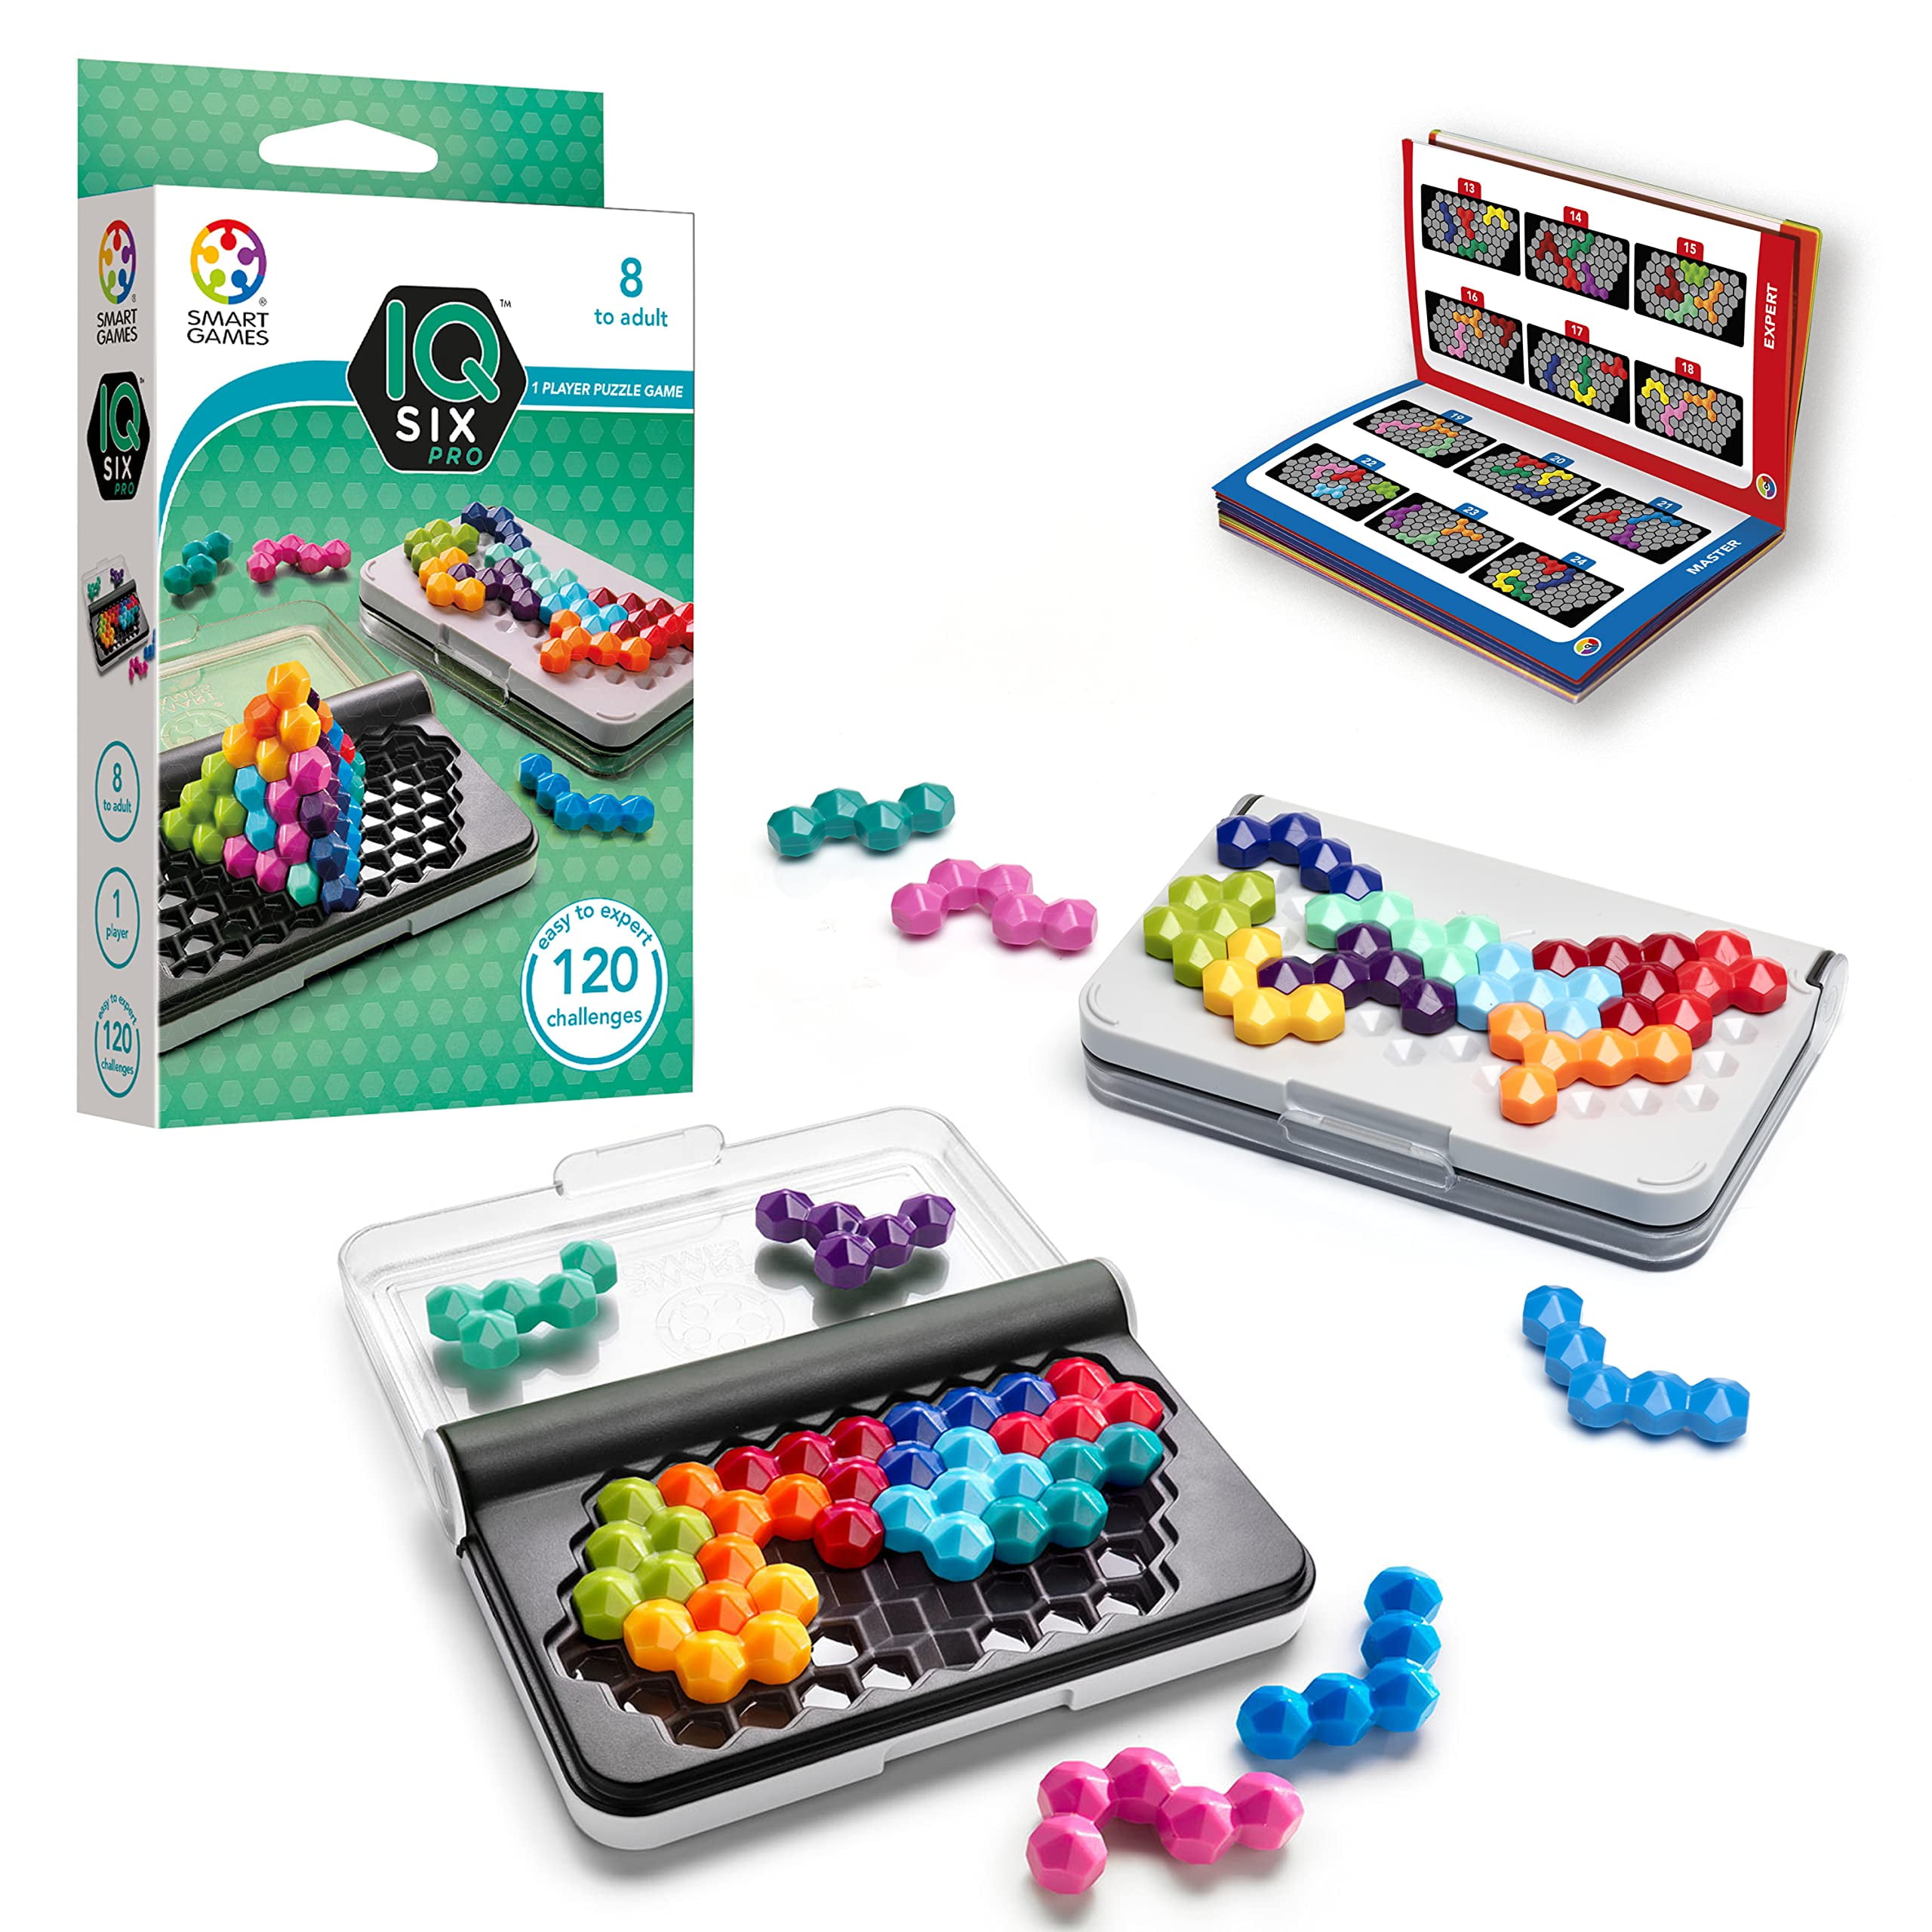 Montessori Toys 120 Challenges Smart IQ Games Puzzler Pro Chain